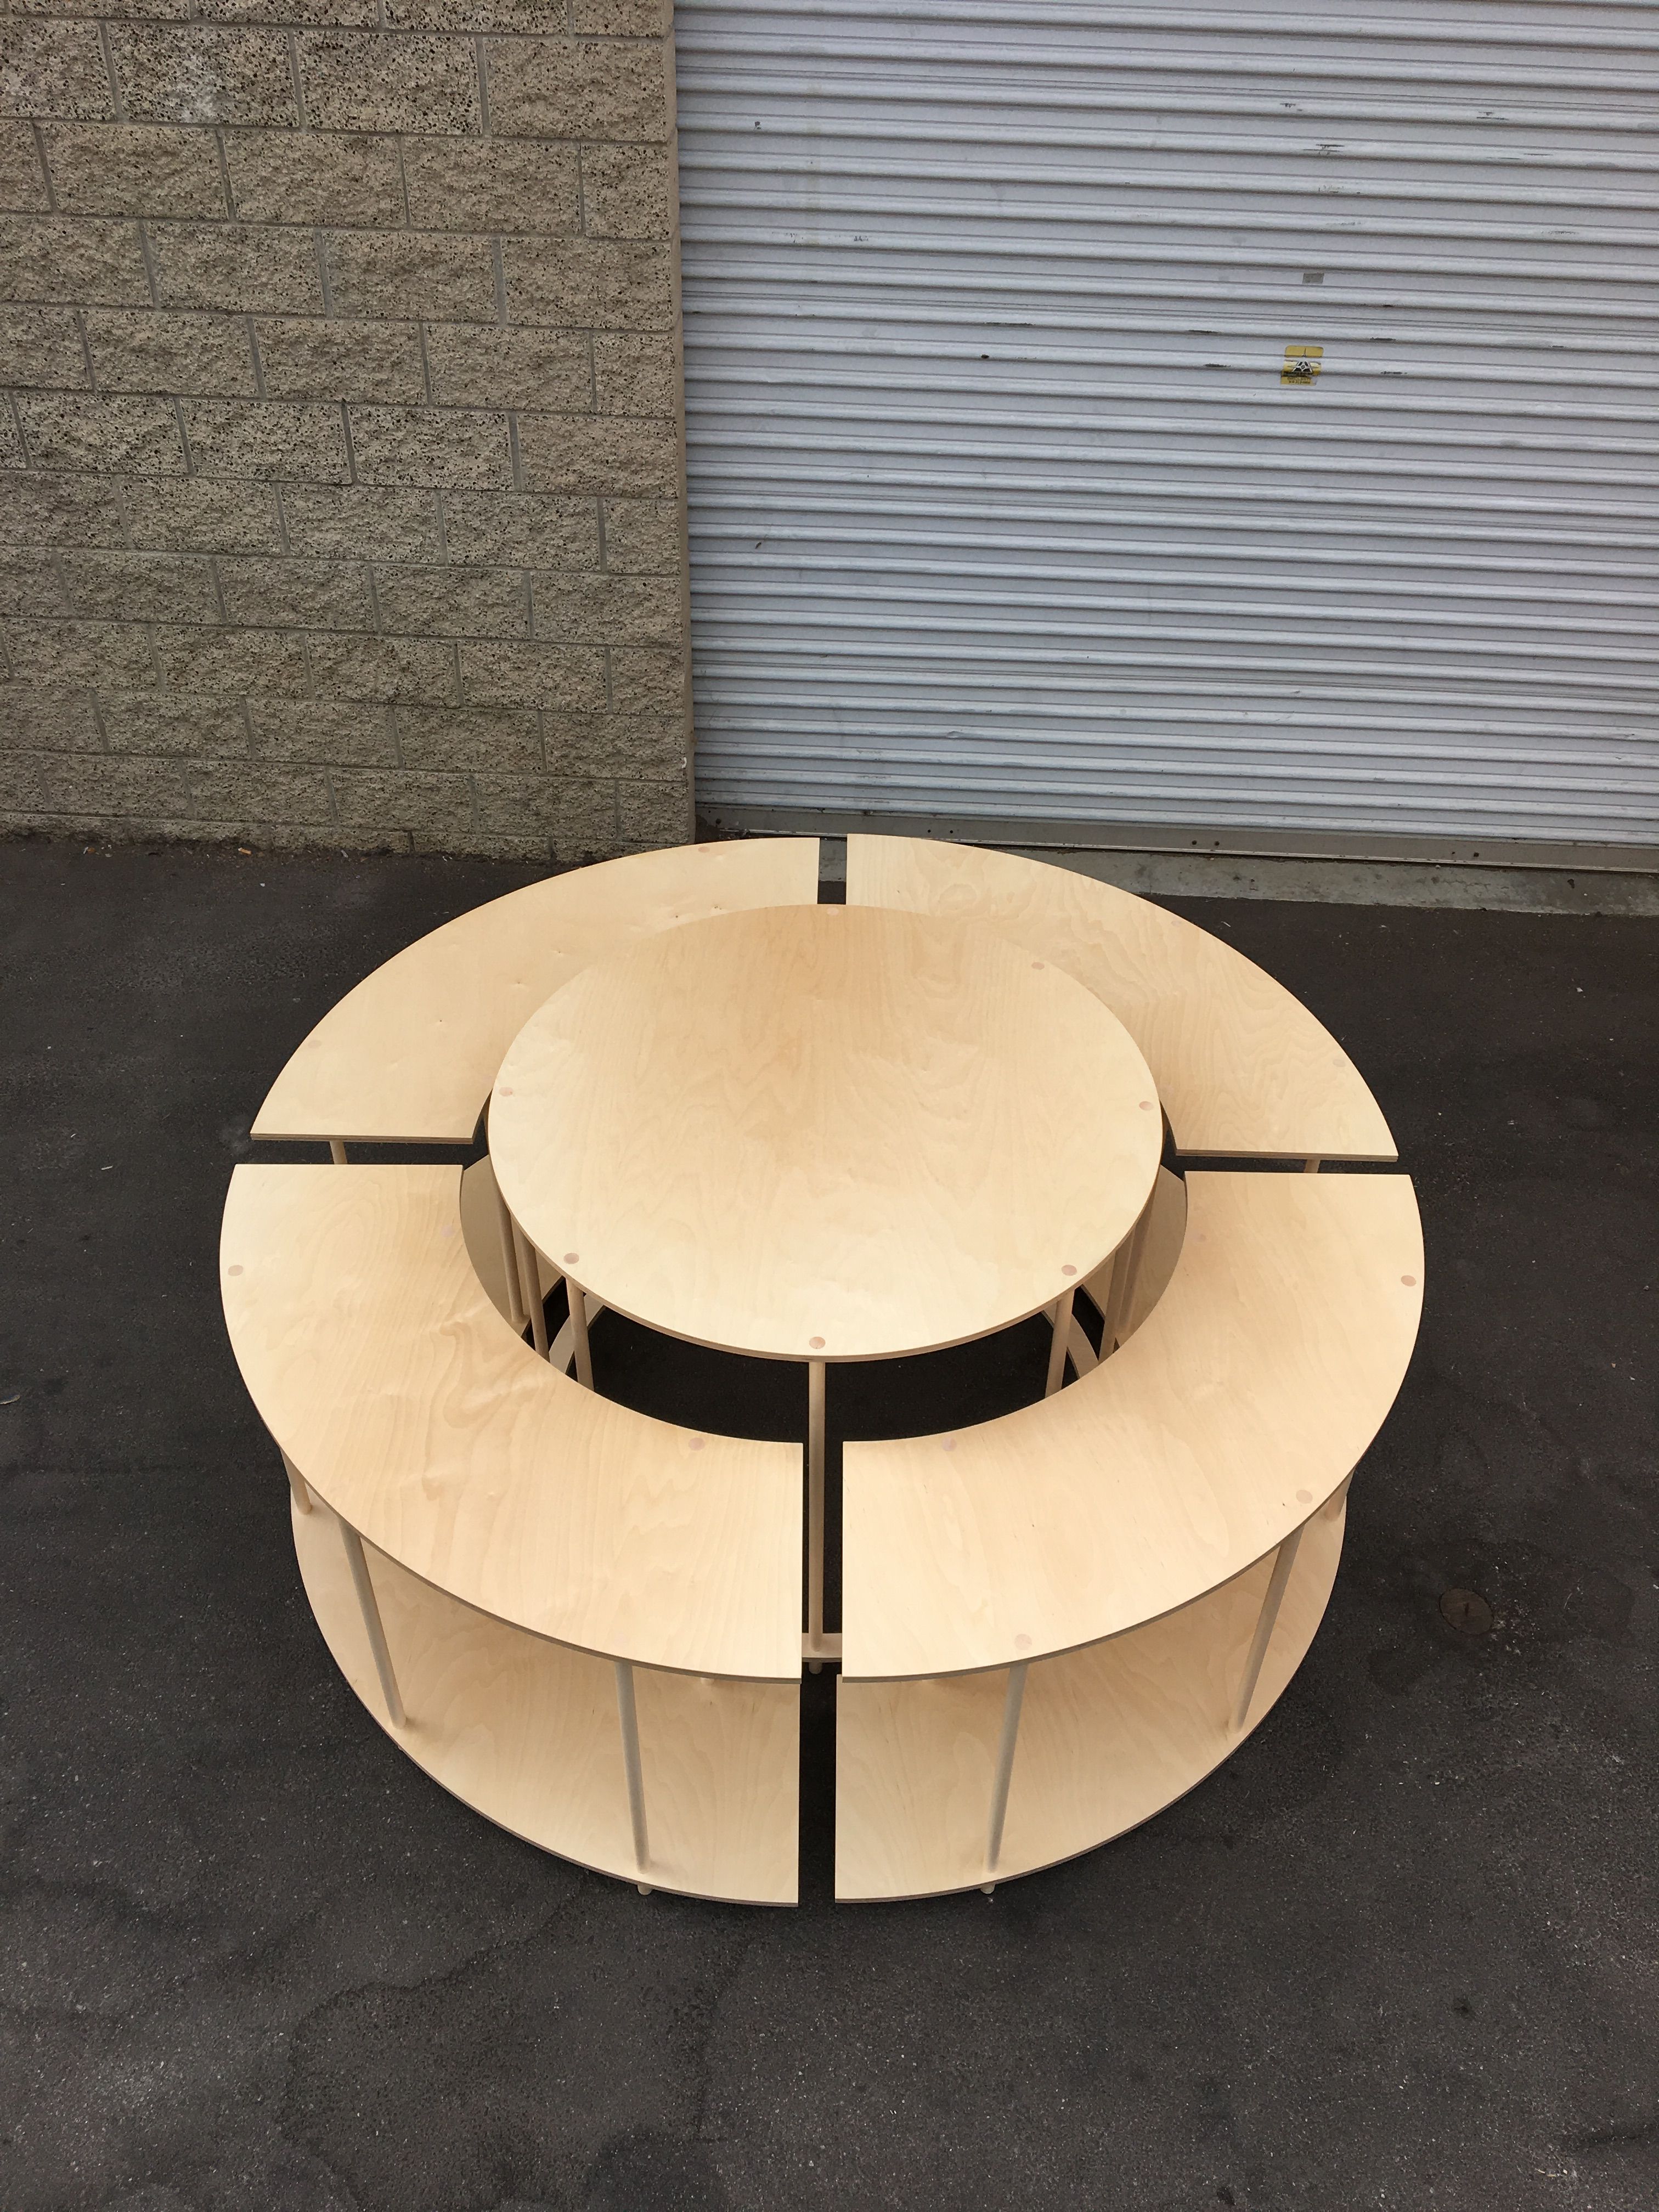  Display Table - Owl Bureau x Adidas / Abbott Kinney Festival product image 8